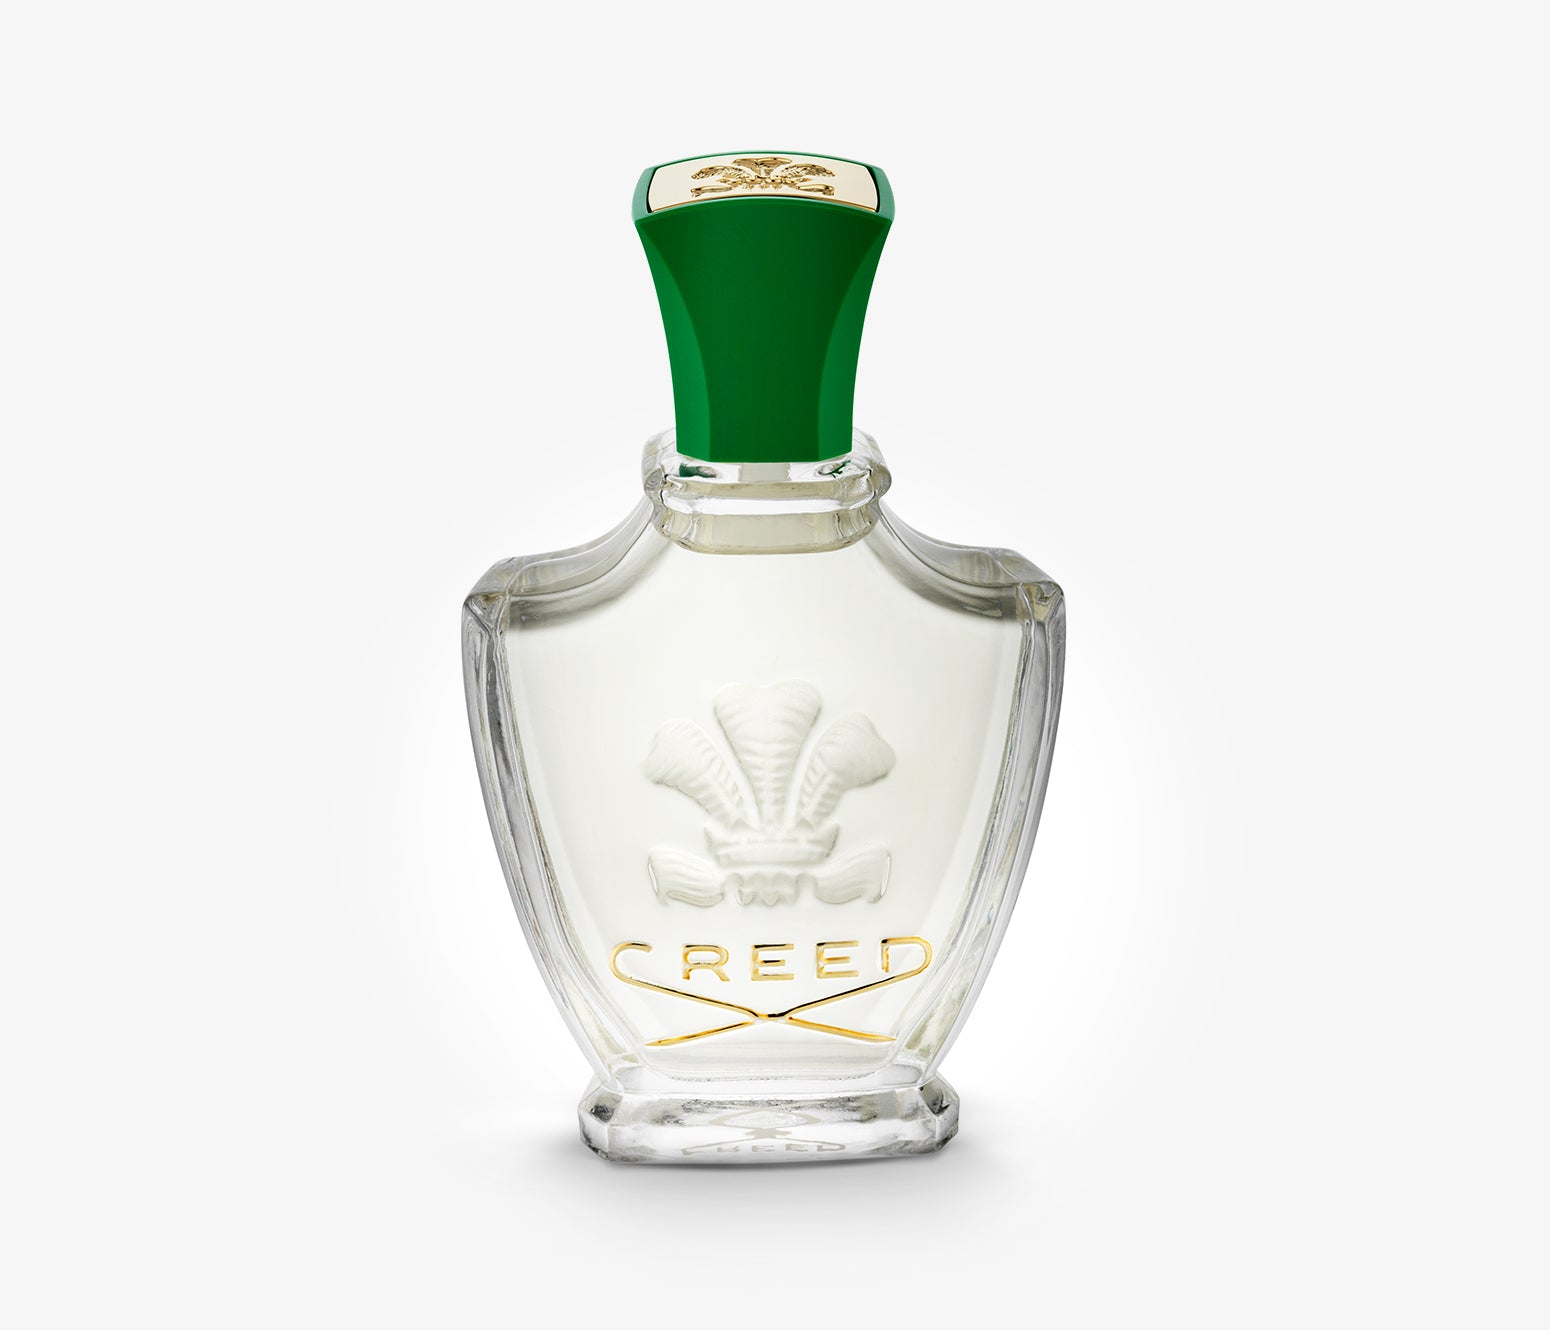 Creed - Fleurissimo - 75ml - 10000197 - Product Image - Fragrance - Les Senteurs